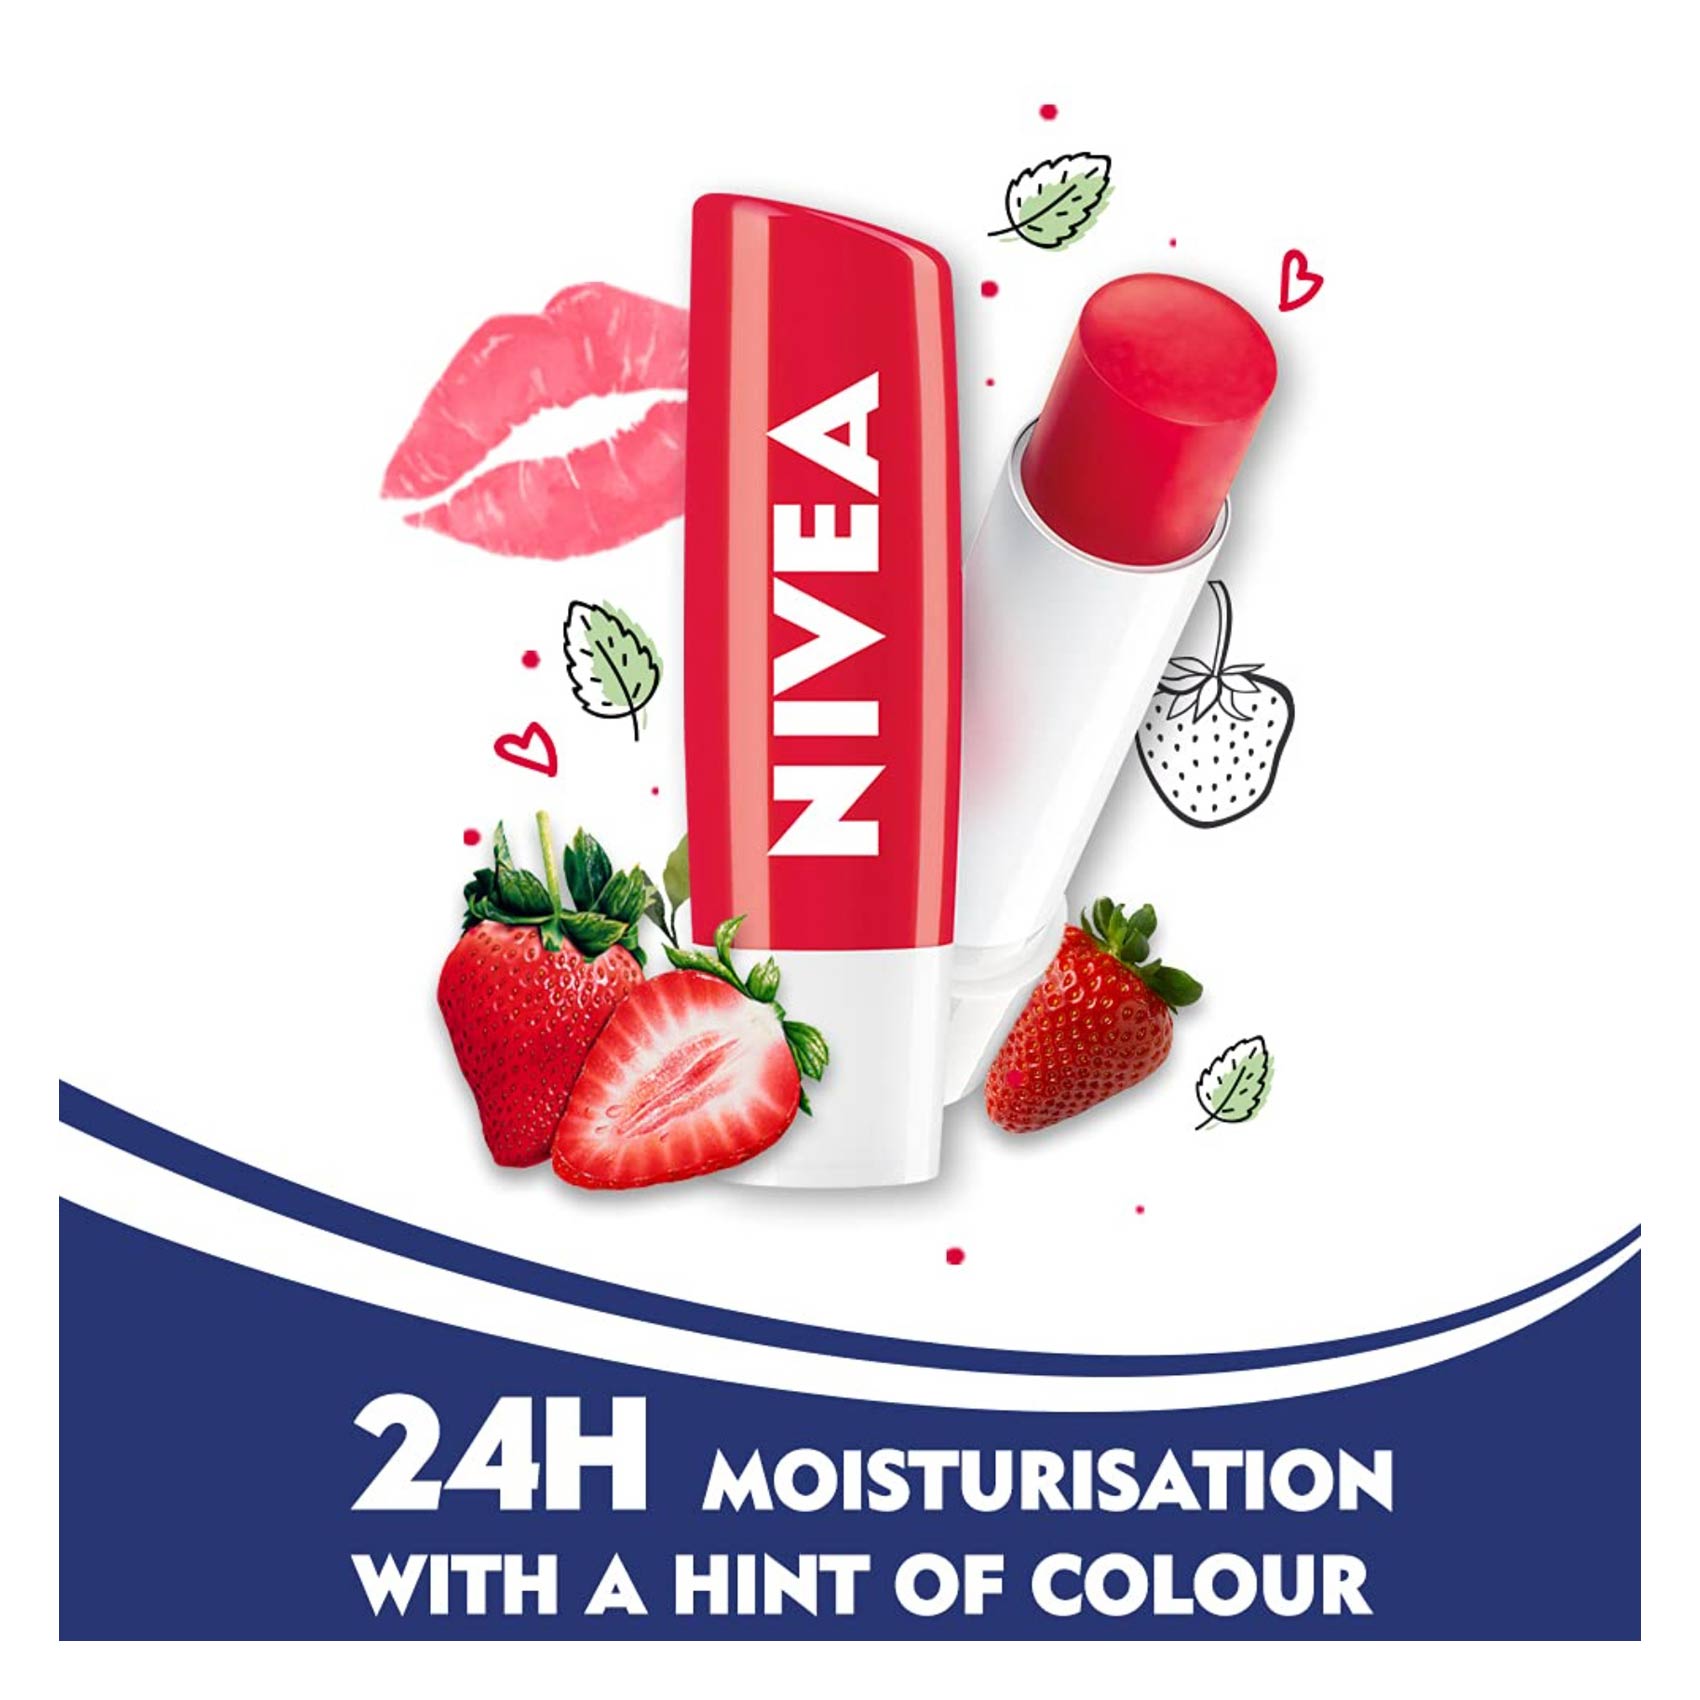 Nivea Lip Balm Strawberry Stick 4.8G